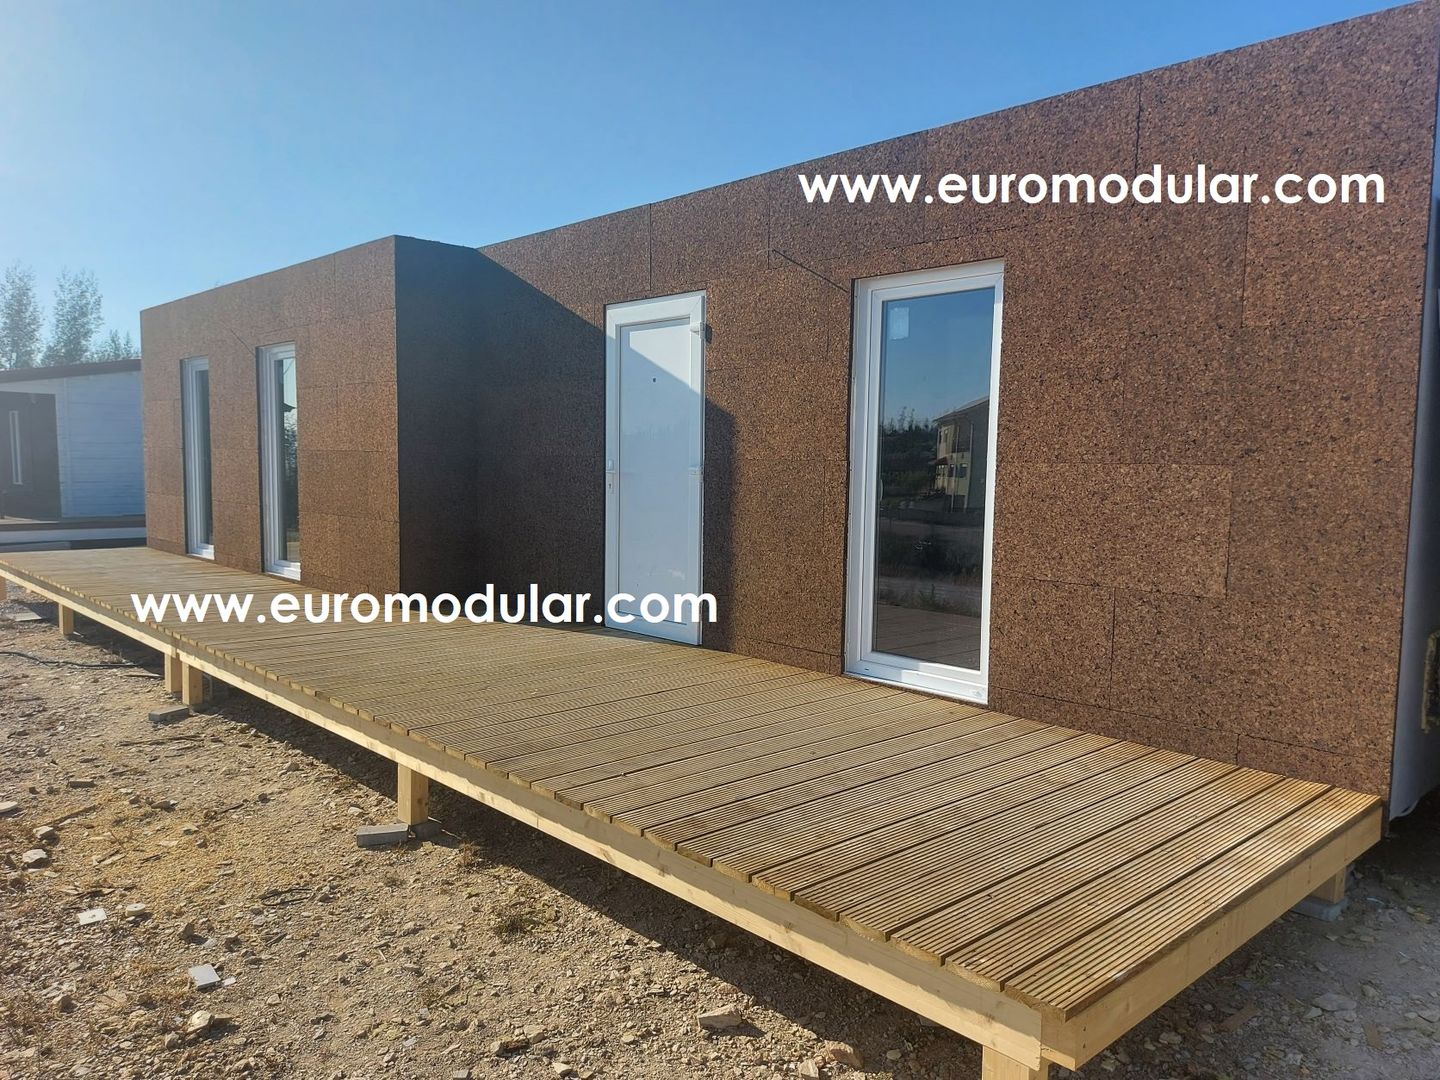 T1 Casa Modular Prefabricada (estrutura metálica), EUROMODULAR EUROMODULAR منزل جاهز للتركيب